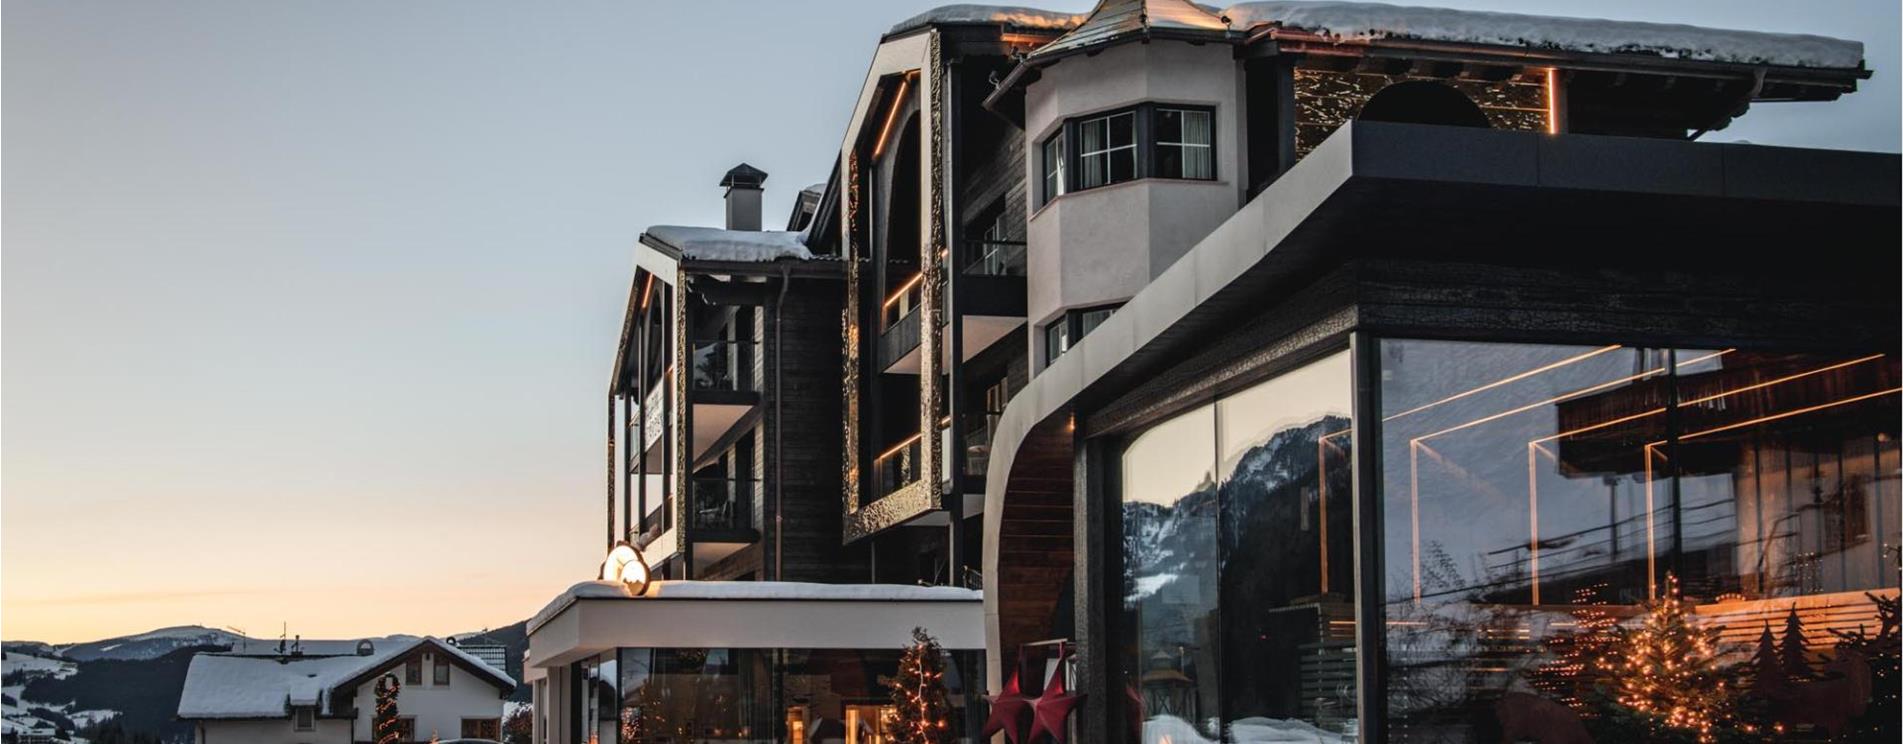 Alpin Garden Hotel 5 Stelle con centro benessere in Val Gardena